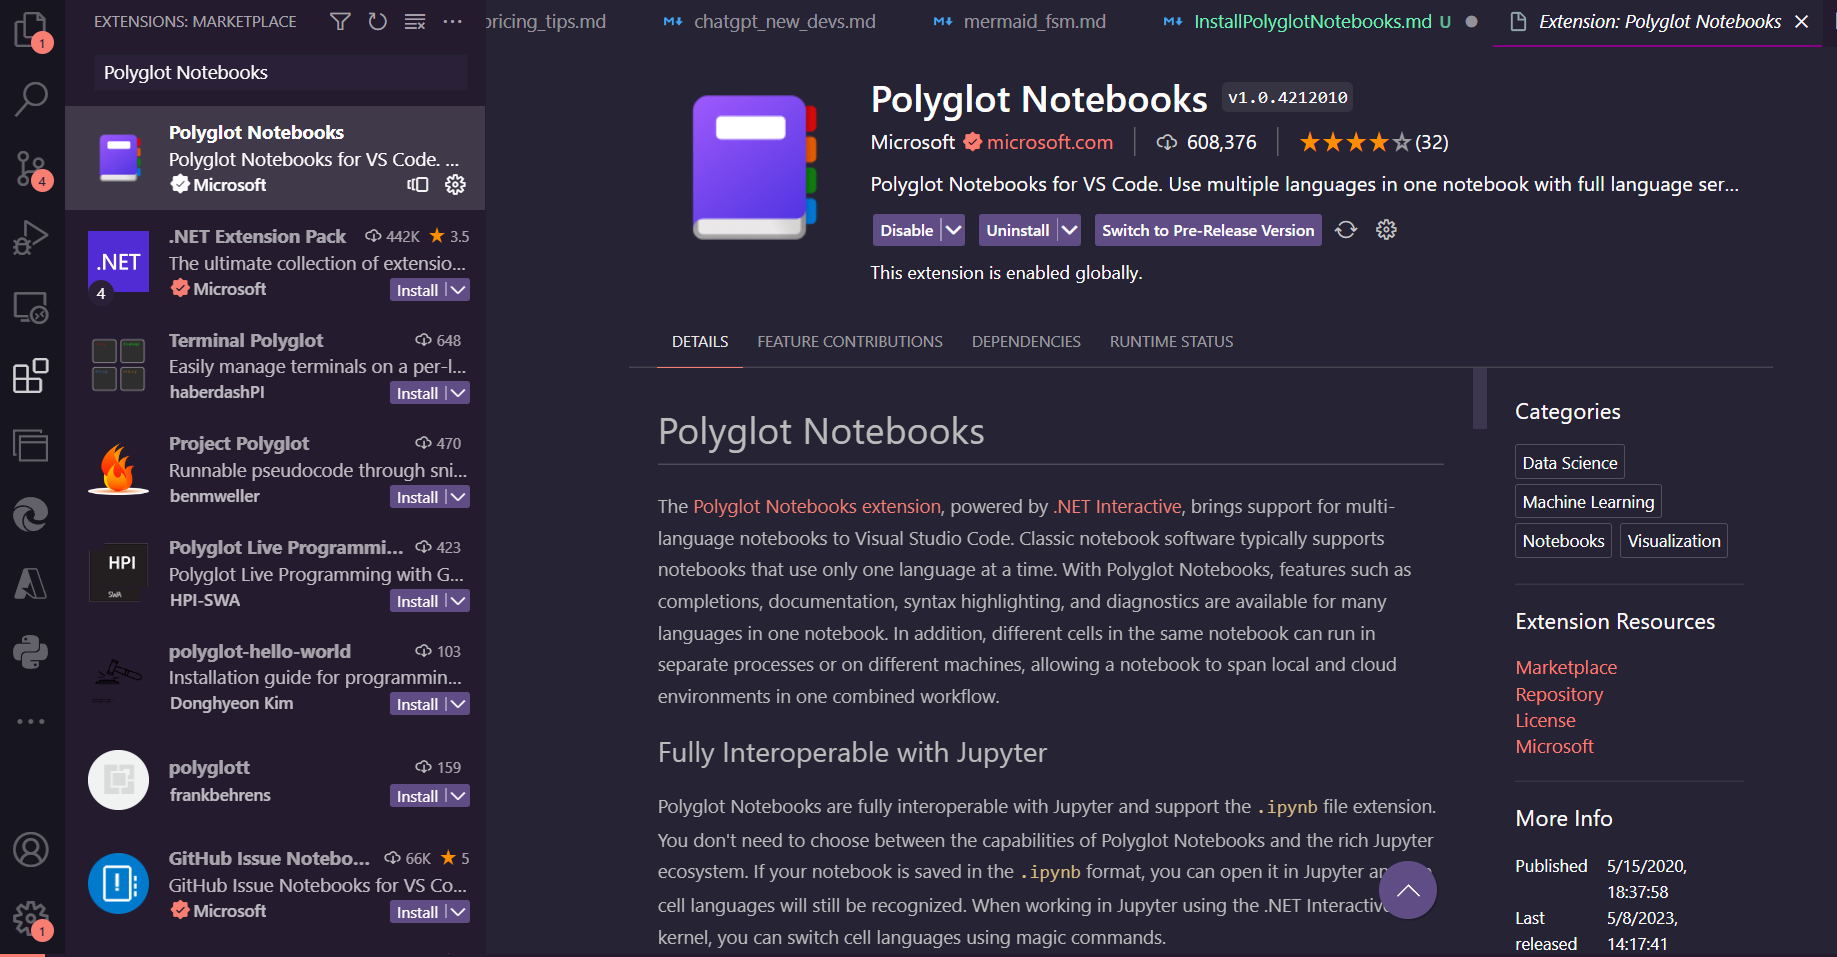 Polyglot Notebooks Extension